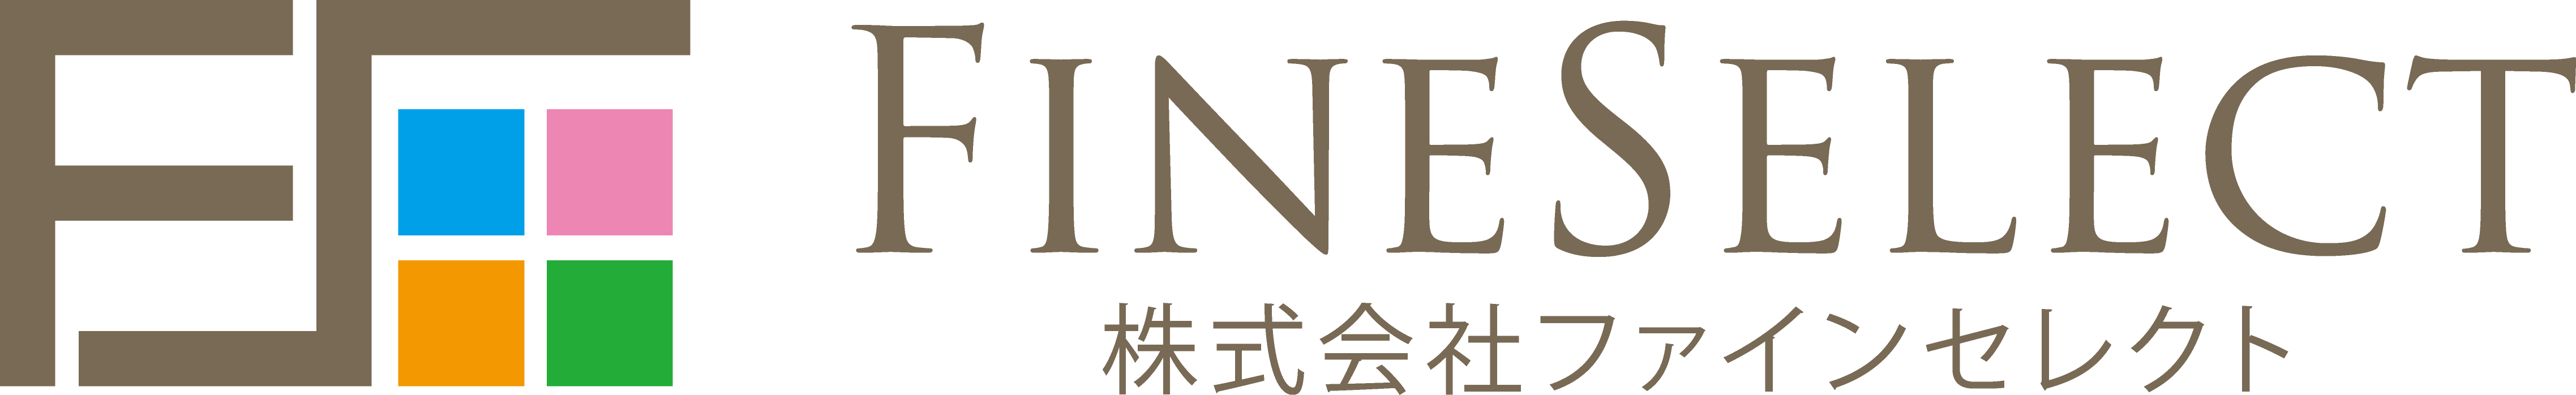 Fine Select Co., Ltd.